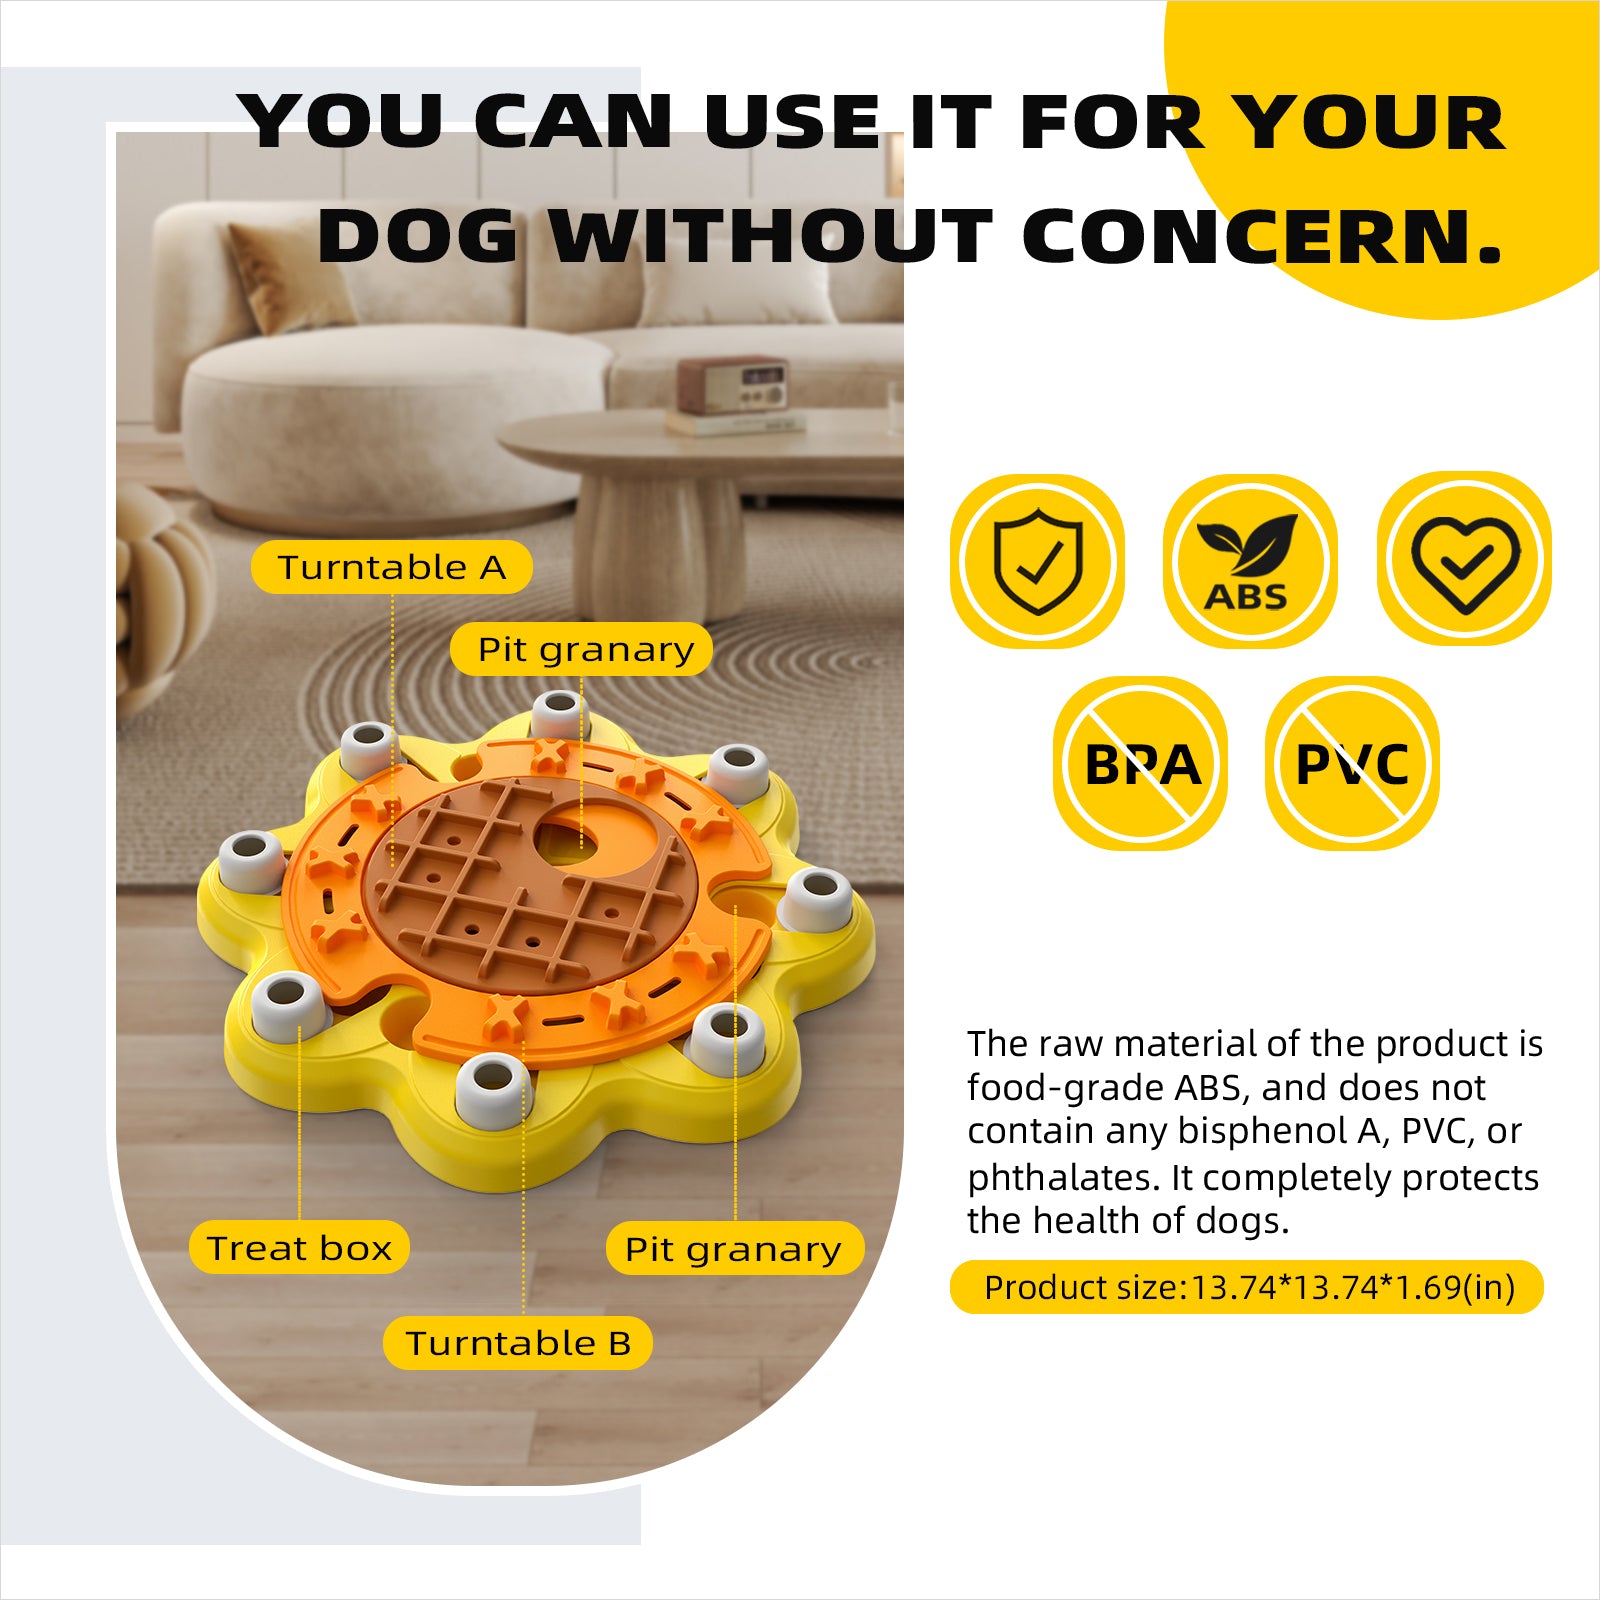 KADTC Dog Puzzle Toy Dogs Brain Stimulation Mentally Stimulating Educationa  Toys Puppy Treat Food Feeder Dispenser Advanced Level 3 in 1 Interactive